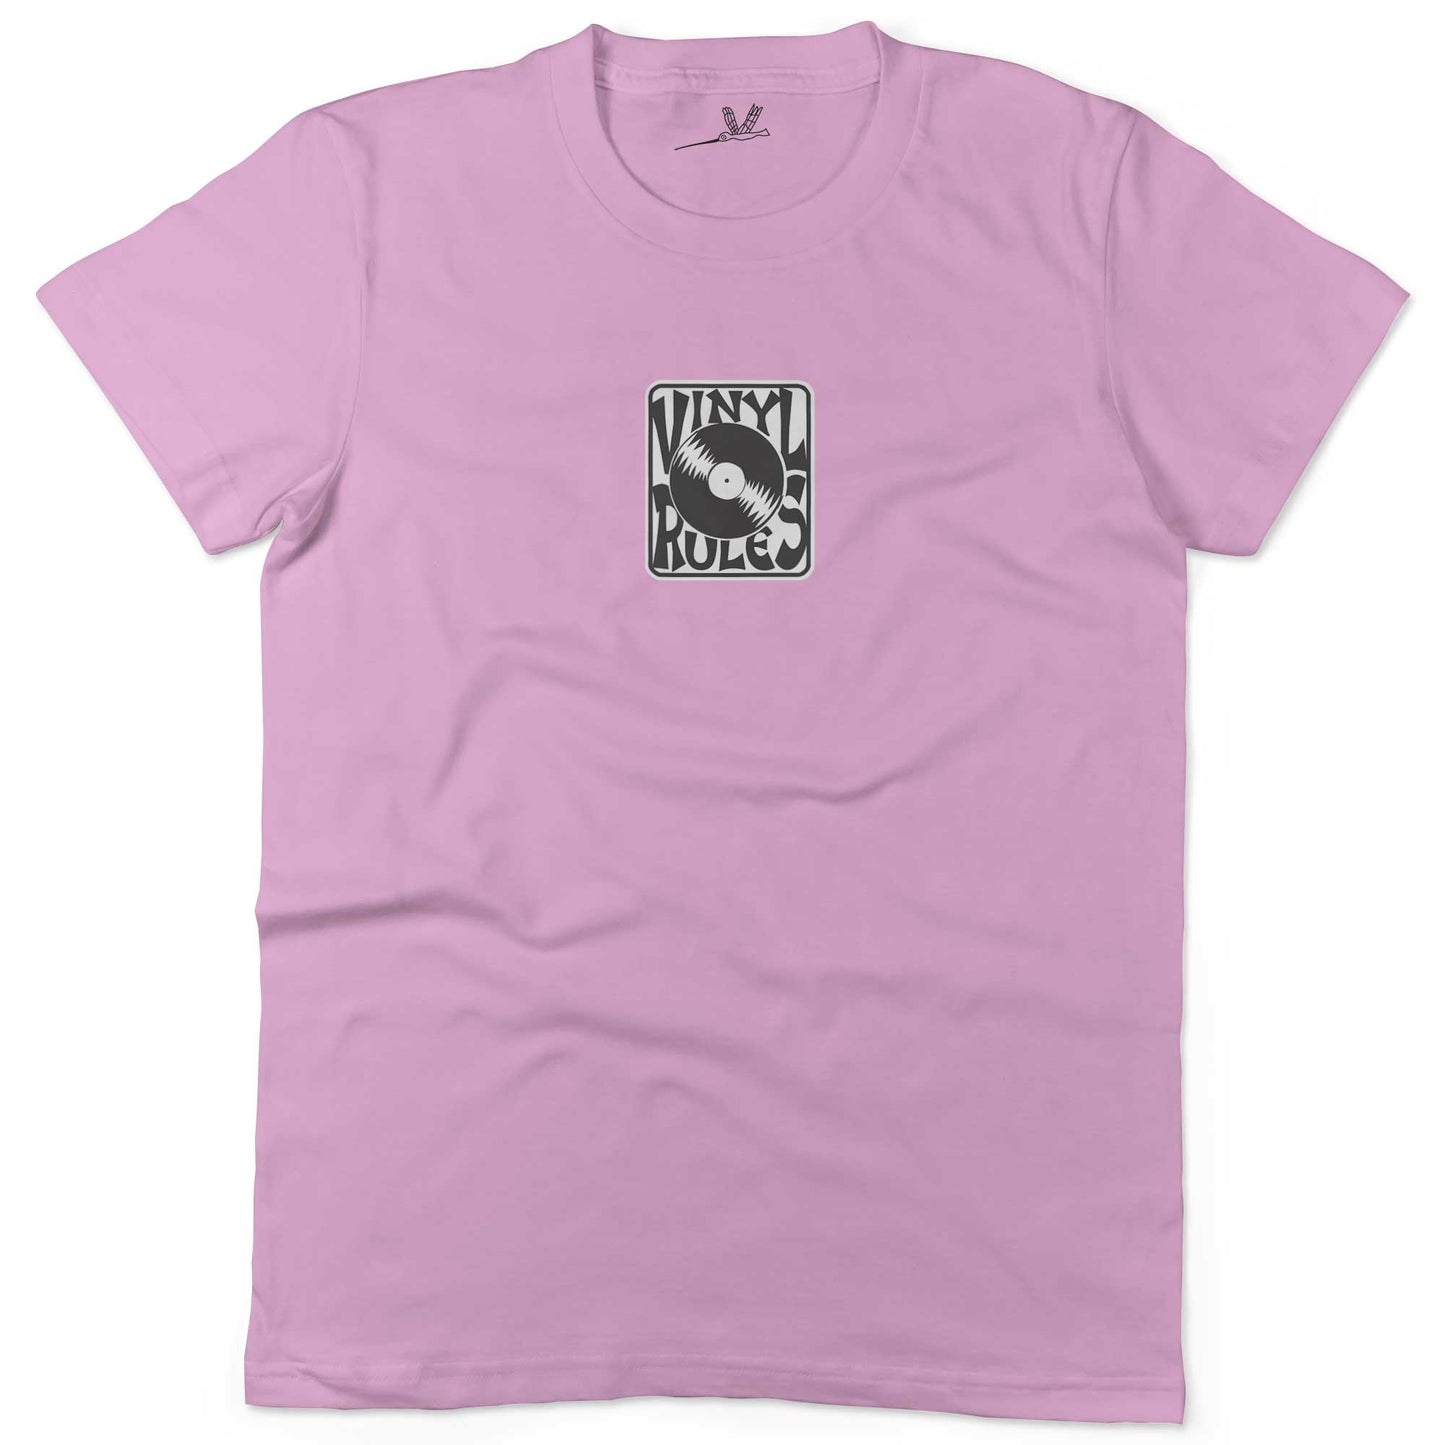 Vinyl Rules Unisex Or Women's Cotton T-shirt-Pink-Woman